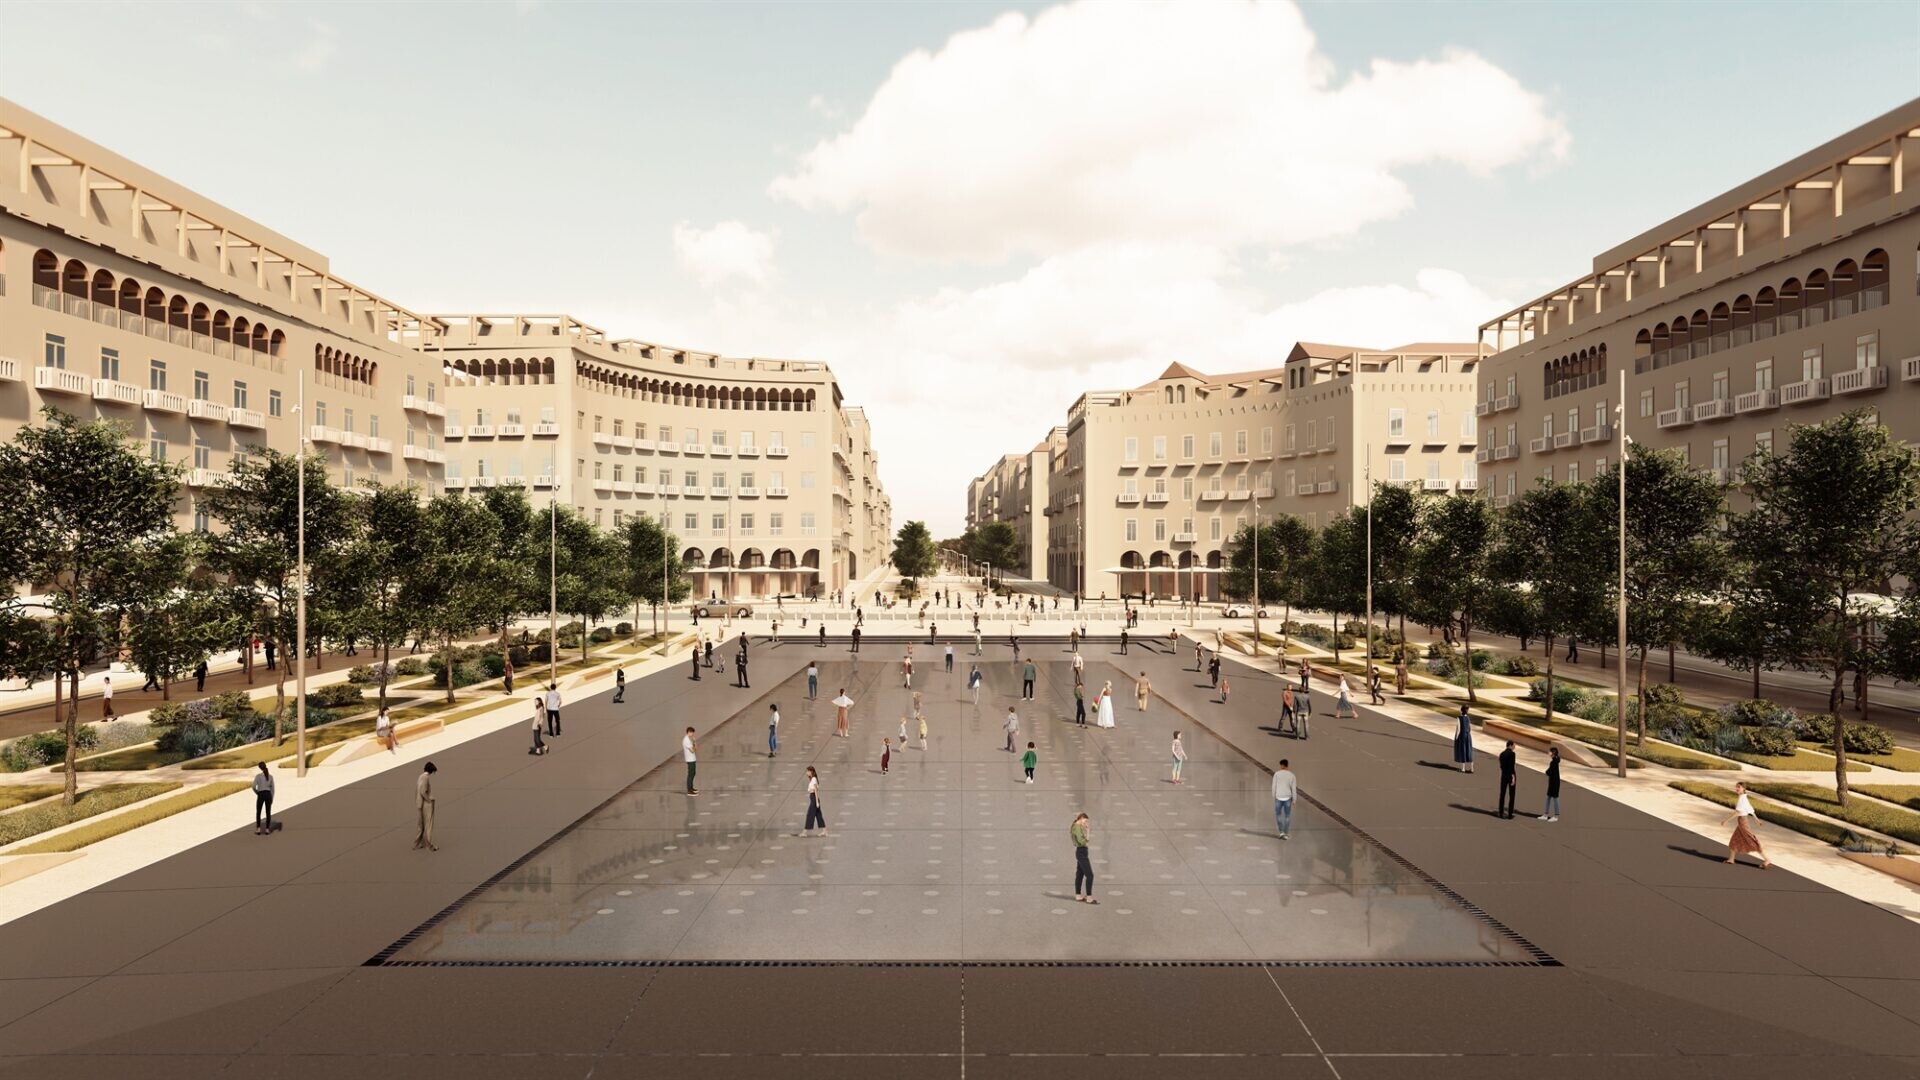 More information about "Το τελικό σχέδιο ανάπλασης για την πλατεία Αριστοτέλους της Θεσσαλονίκης"